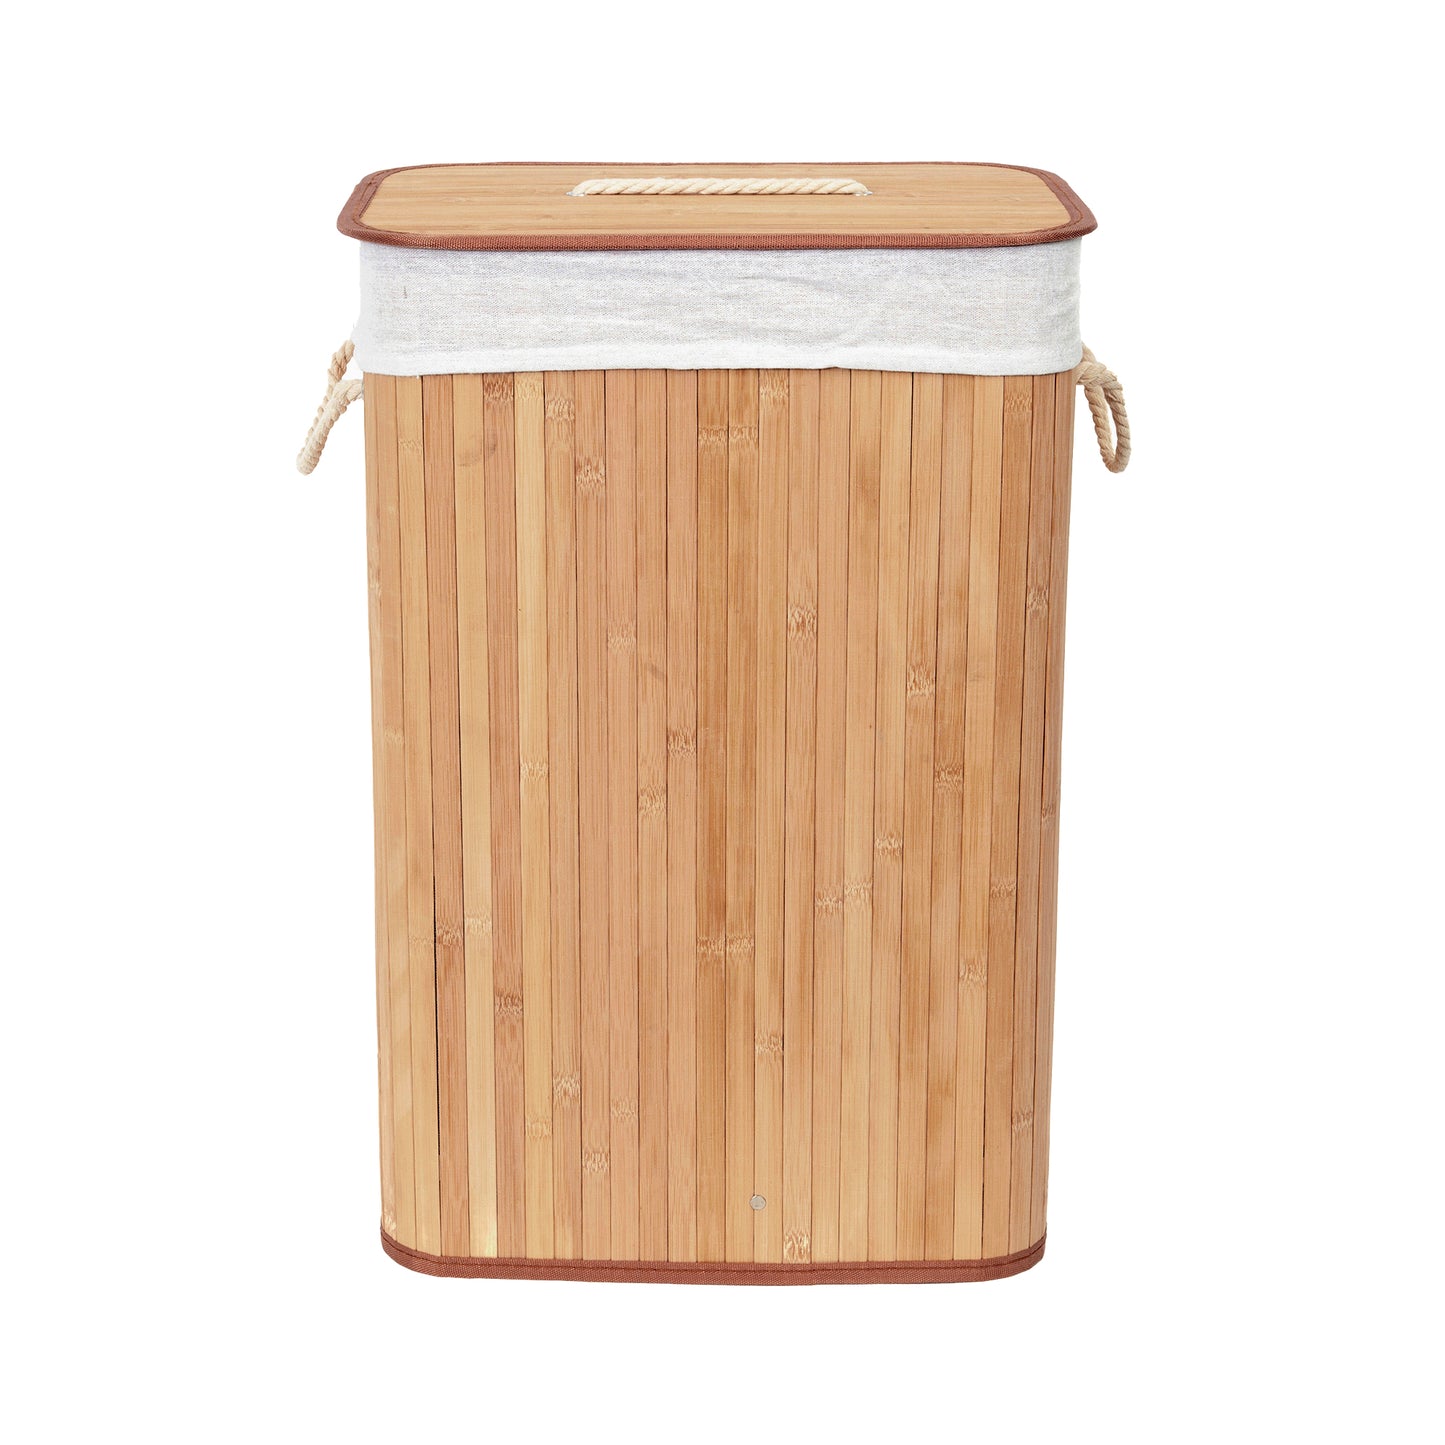 Set de 1 cesto para la ropa sucia + 2 cestos de almacenaje de bambú con tejido natural Ross